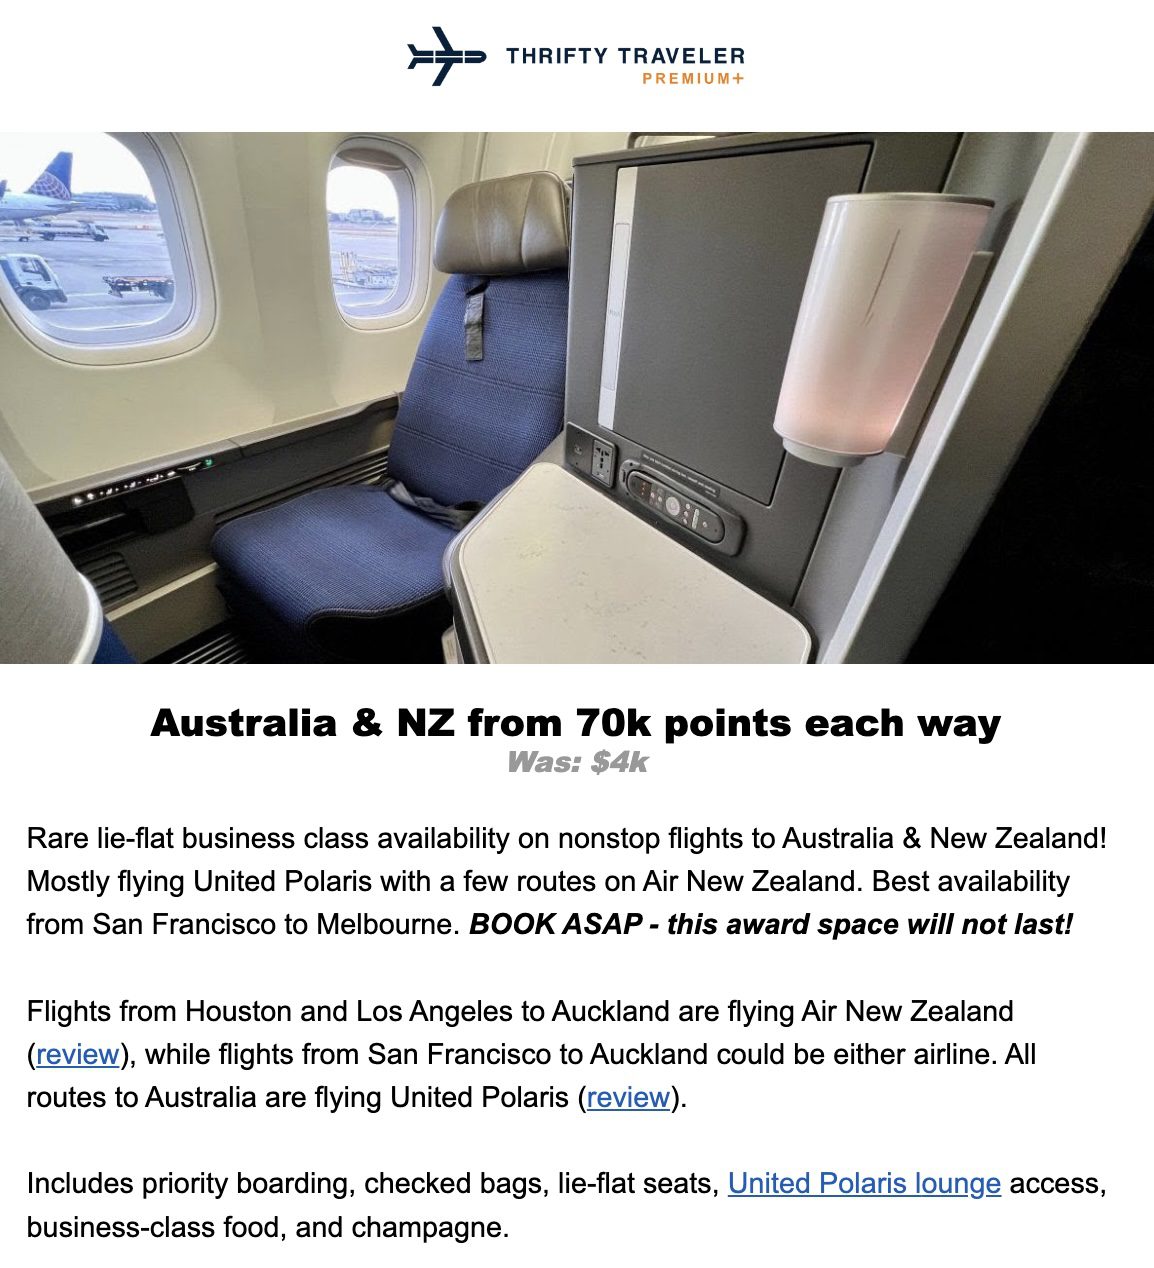 Polaris business class to Australia and New Zealand